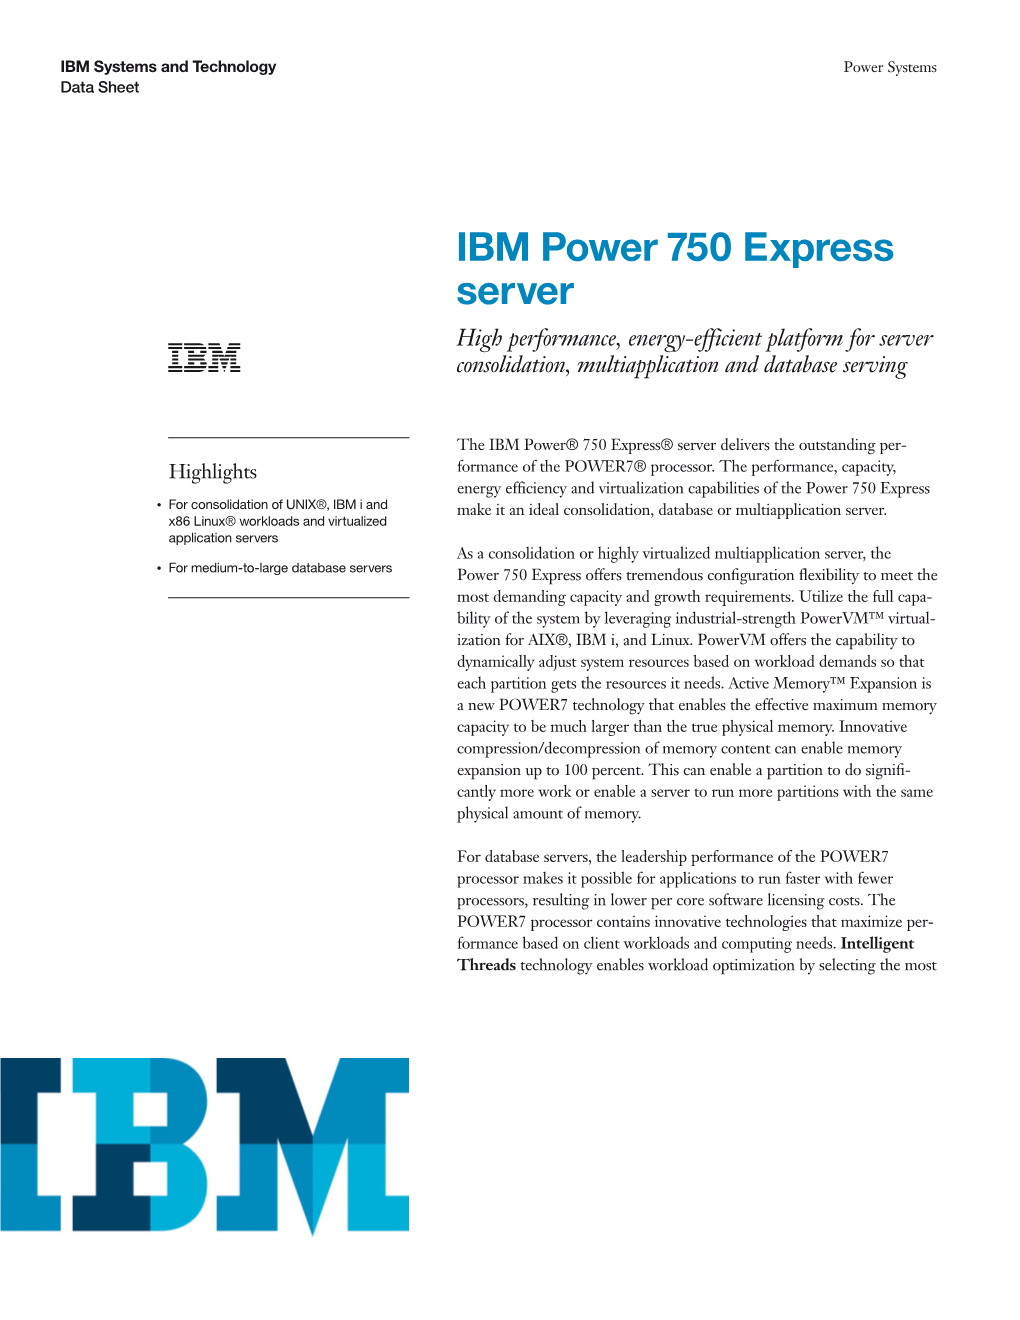 IBM Power 750 Express Server High Performance, Energy-Efficient Platform for Server Consolidation, Multiapplication and Database Serving